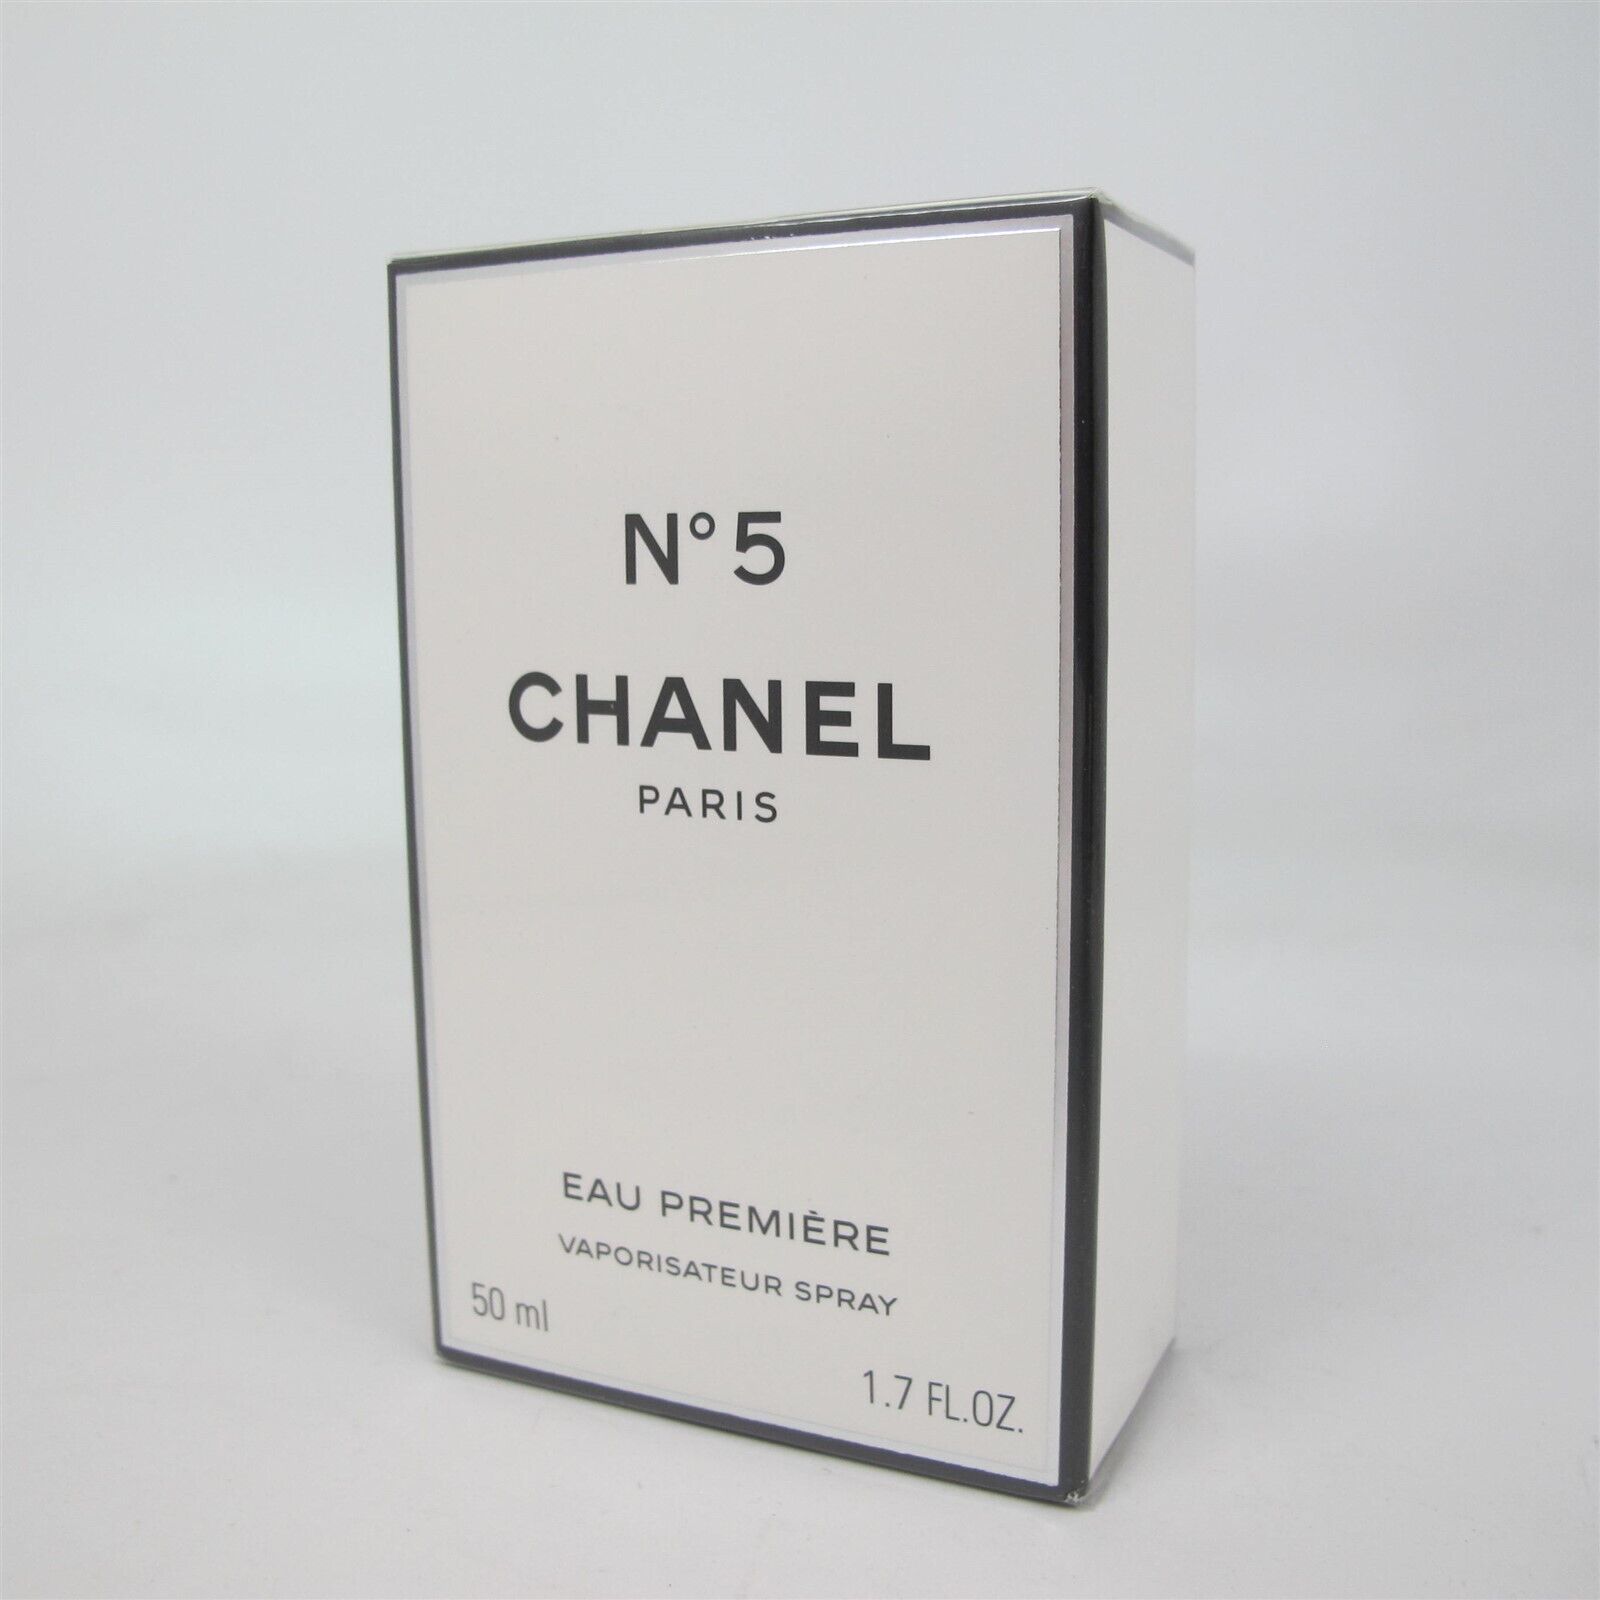 Chanel No.5 EAU PREMIERE 50 ml/ 1.7 oz Eau de Parfum Spray NIB - $128.69